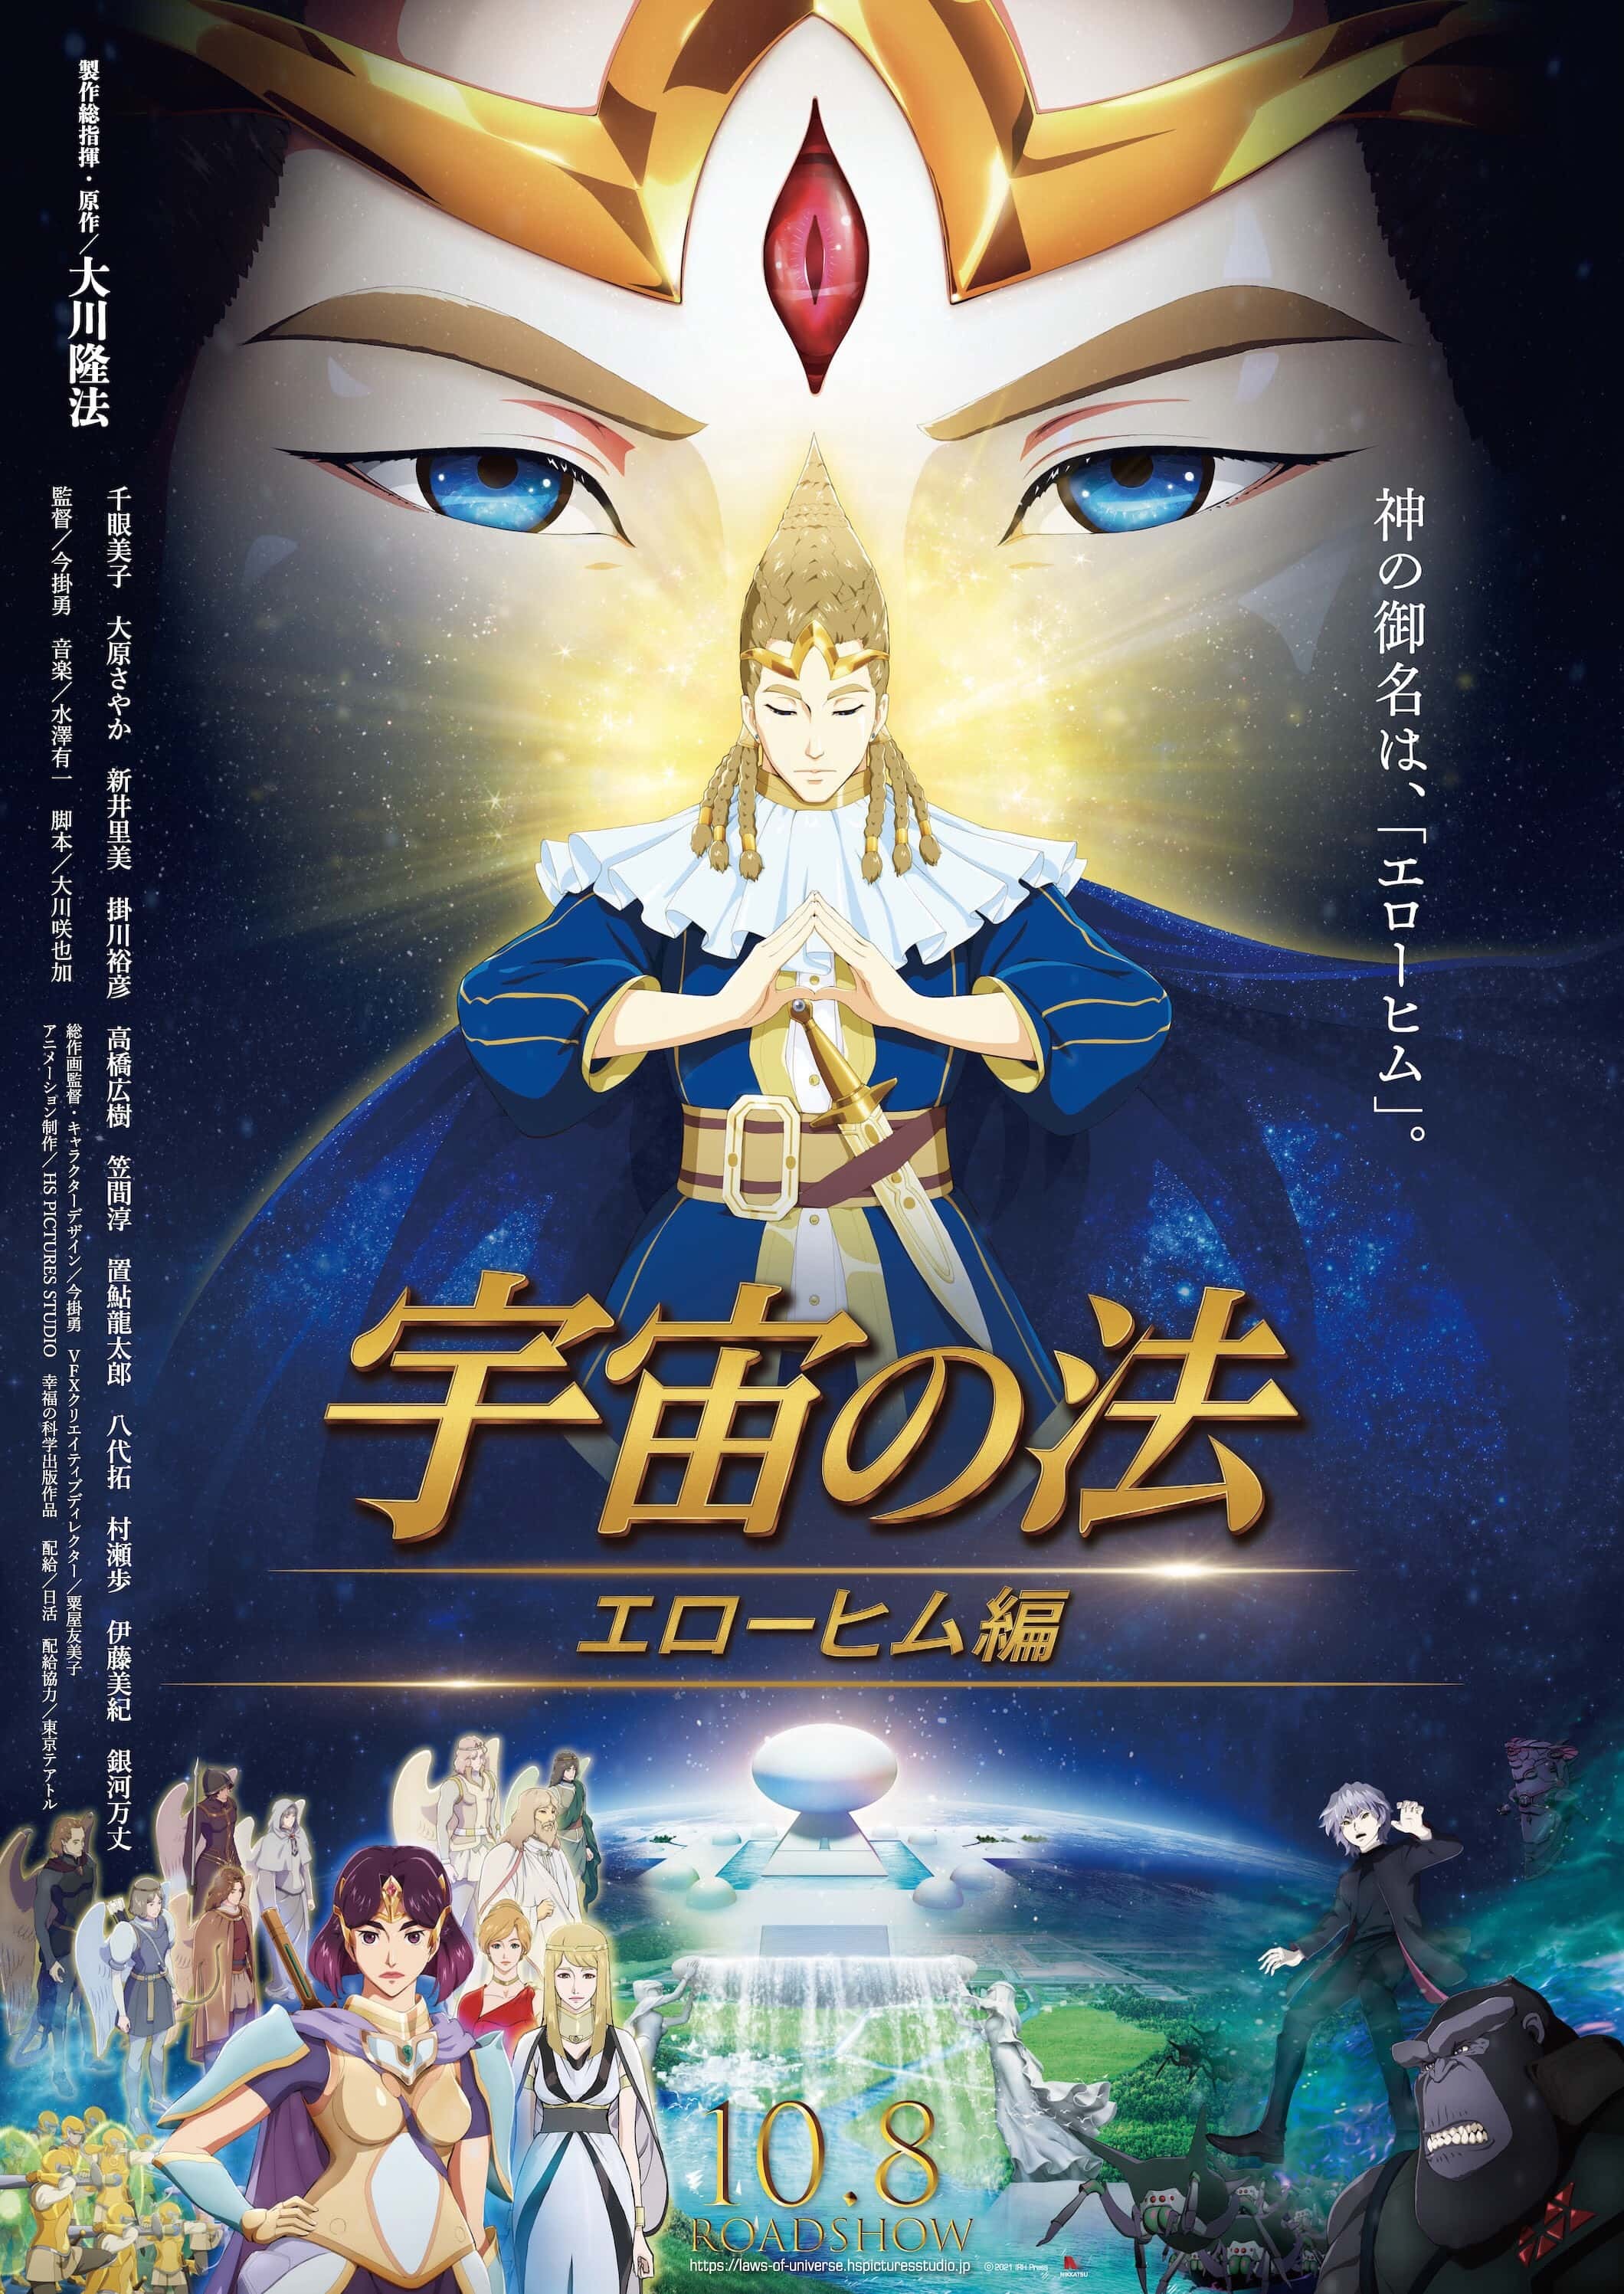 Mega Sized Movie Poster Image for Uchuu no Hou: Erohim-hen (#1 of 2)